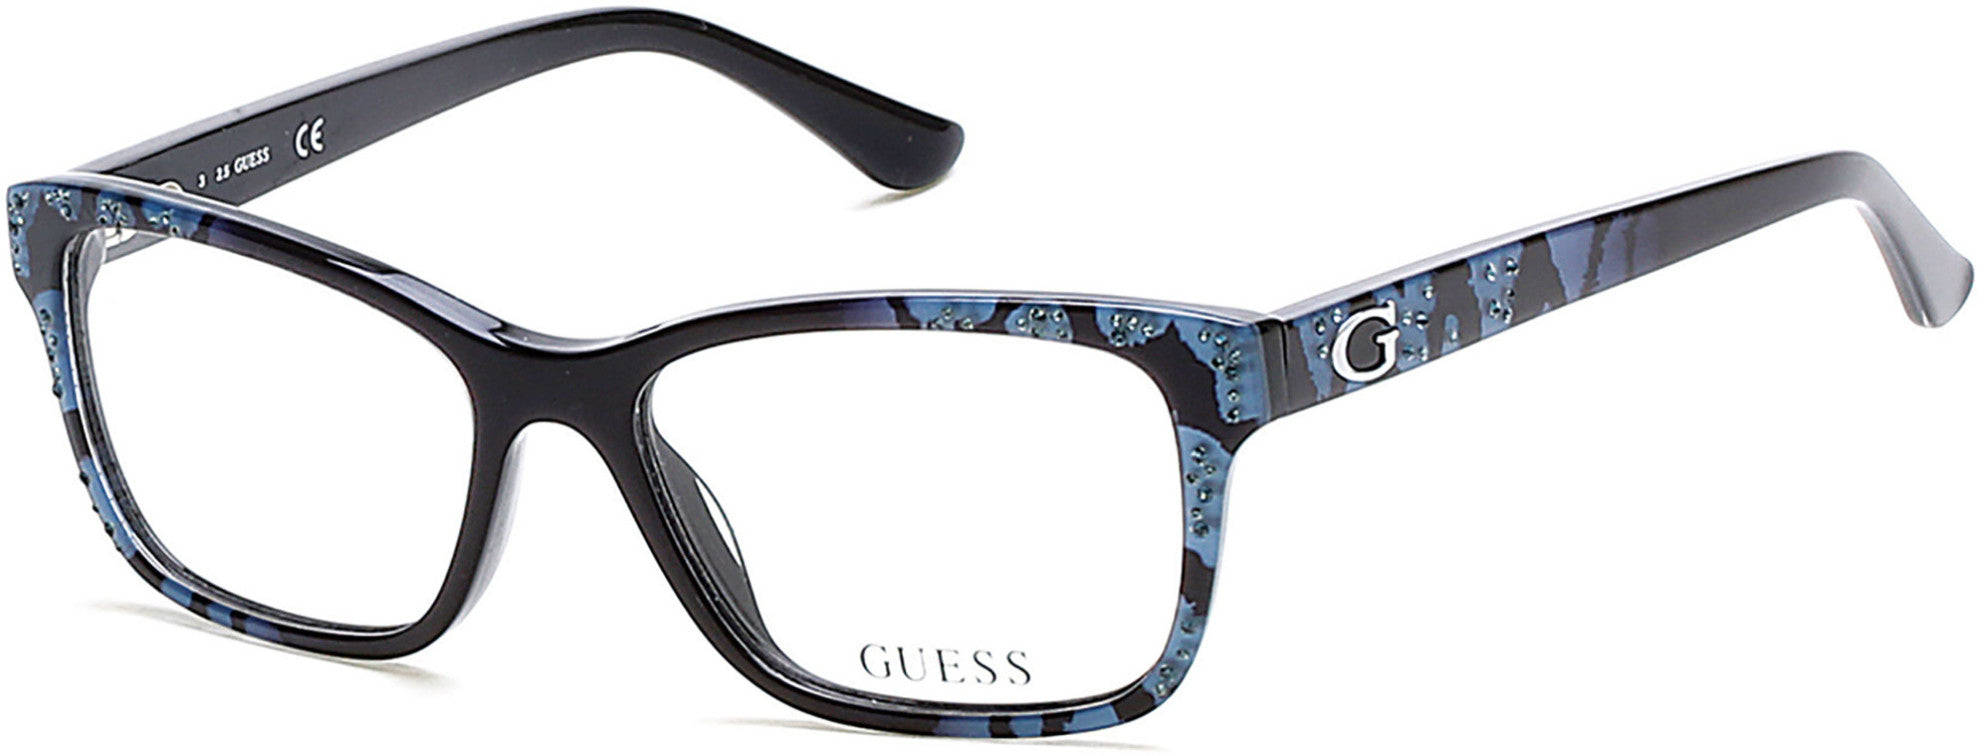 Guess GU2553 Geometric Eyeglasses 005-005 - Black/other